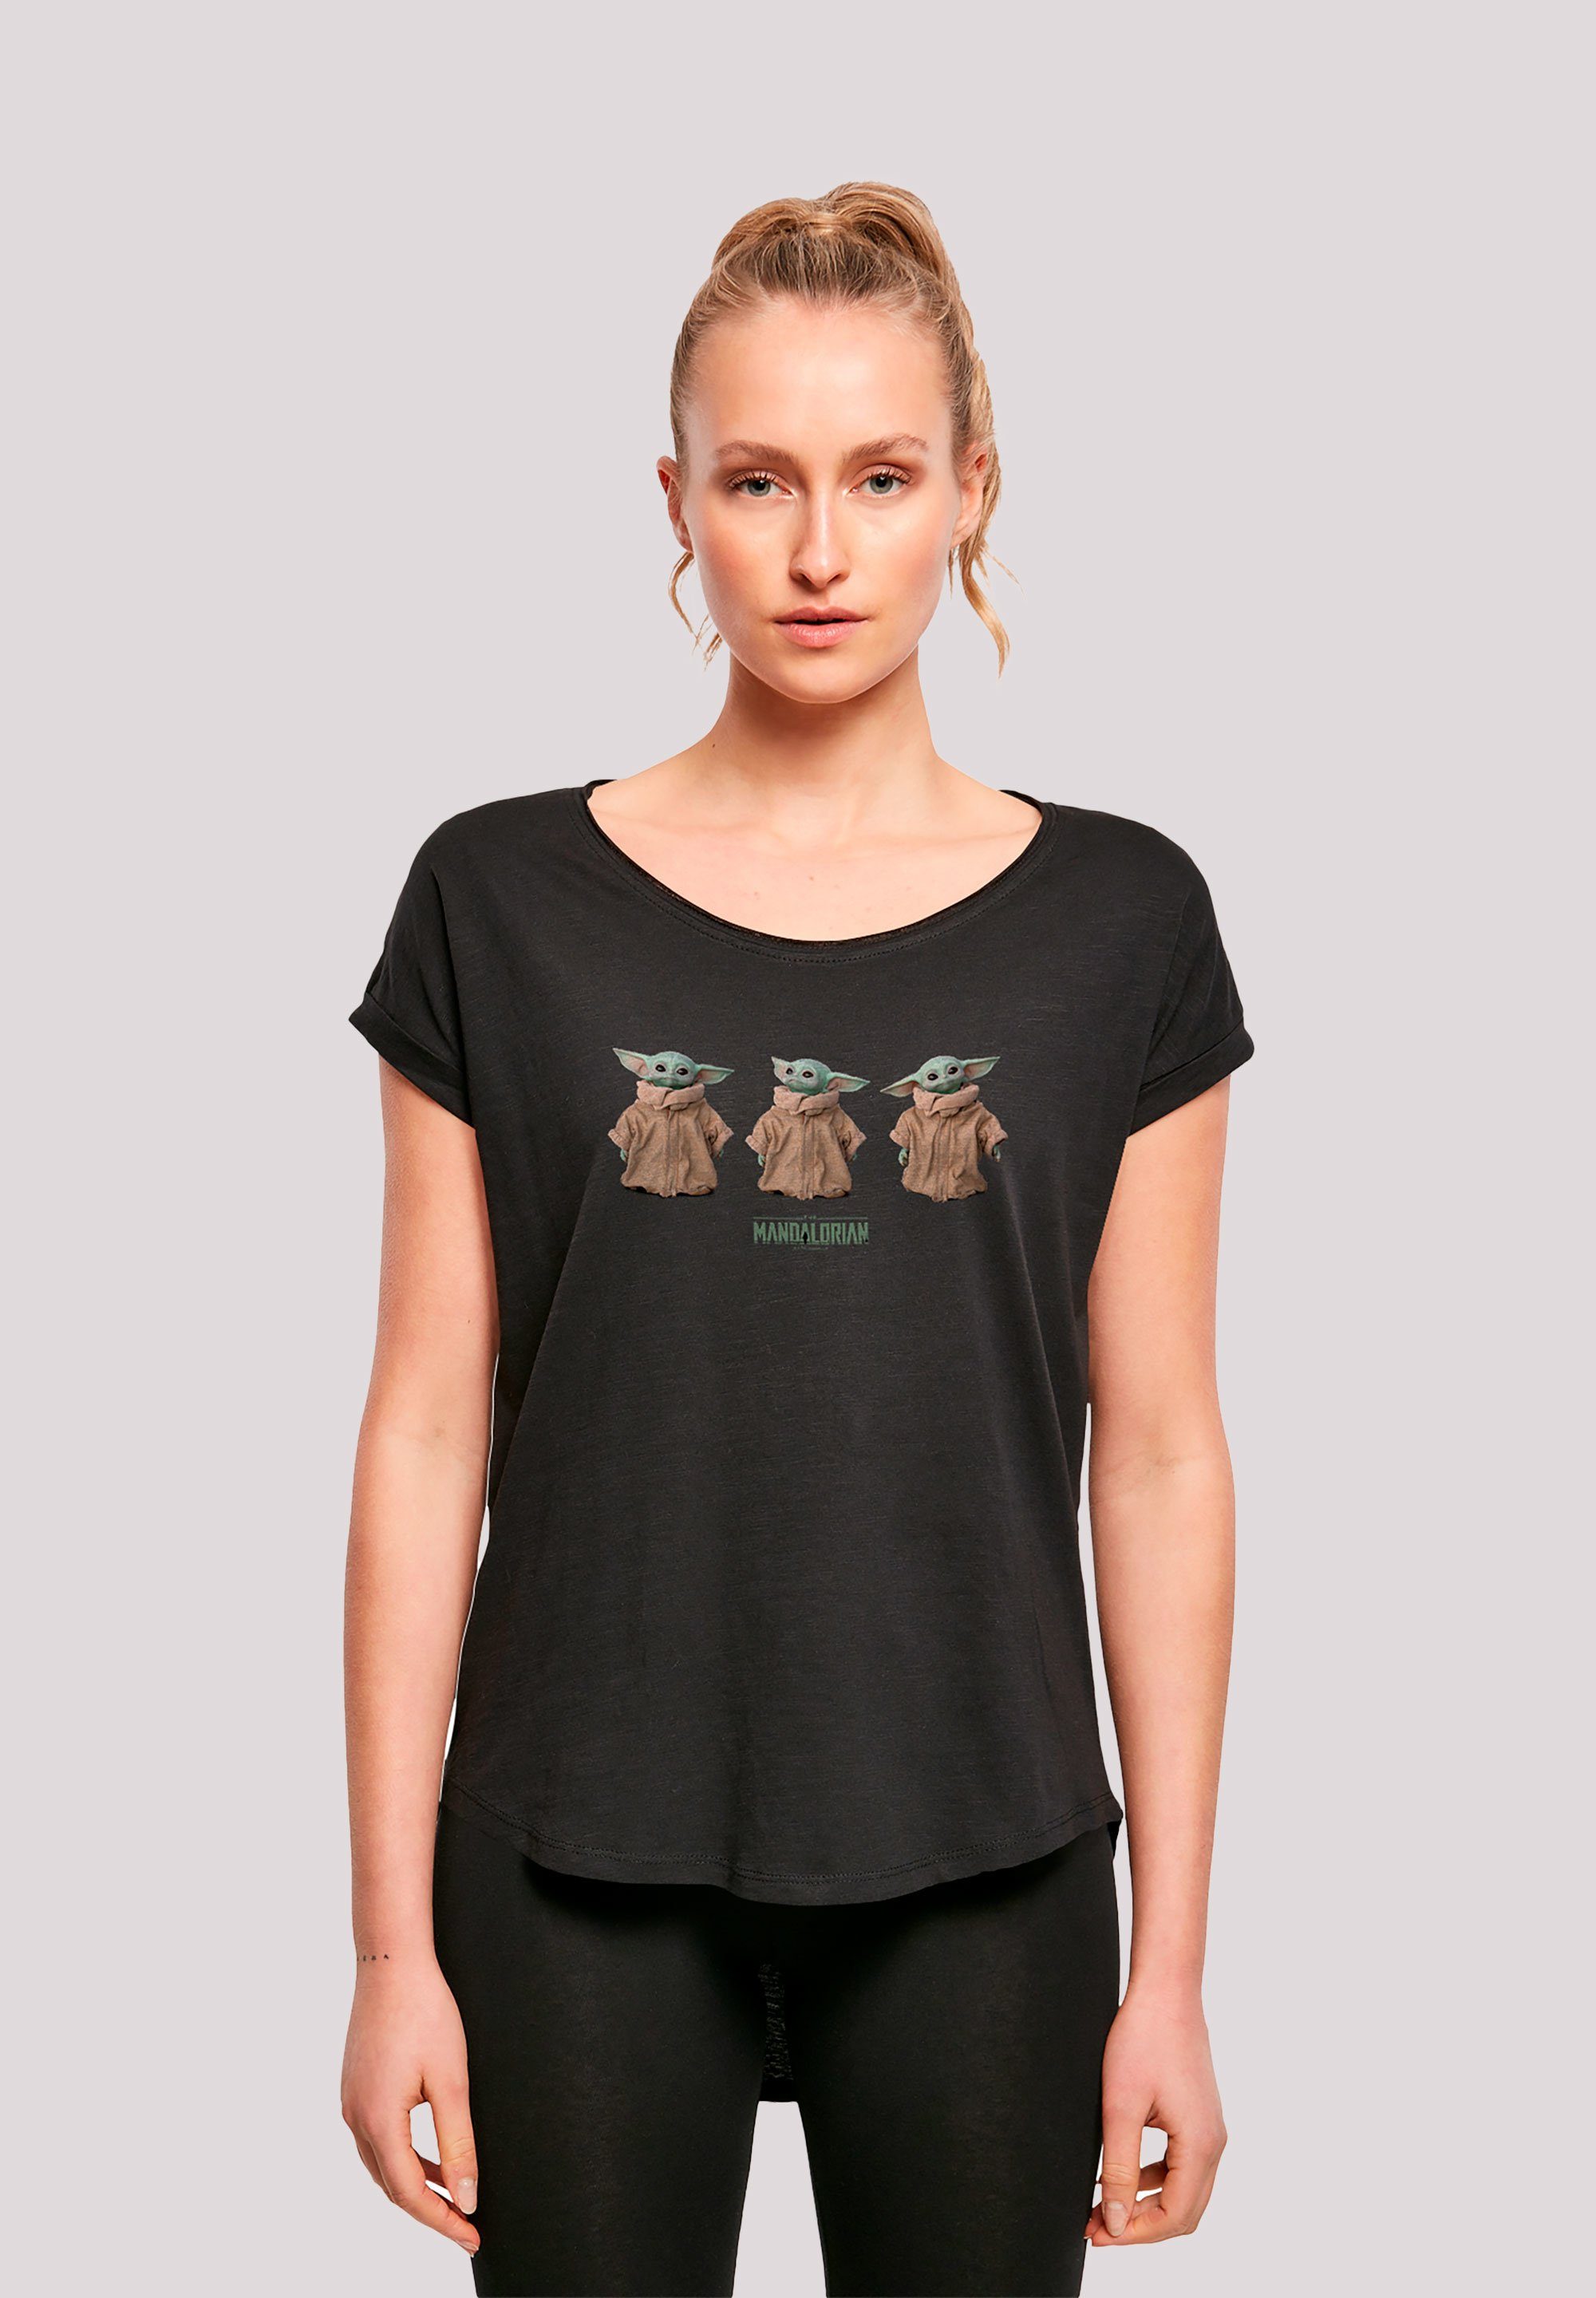 F4NT4STIC T-Shirt Star Wars The Mandalorian Baby Yoda - Premium Fan Merch Damen,Premium Merch,Lang,Longshirt,Bedruckt schwarz